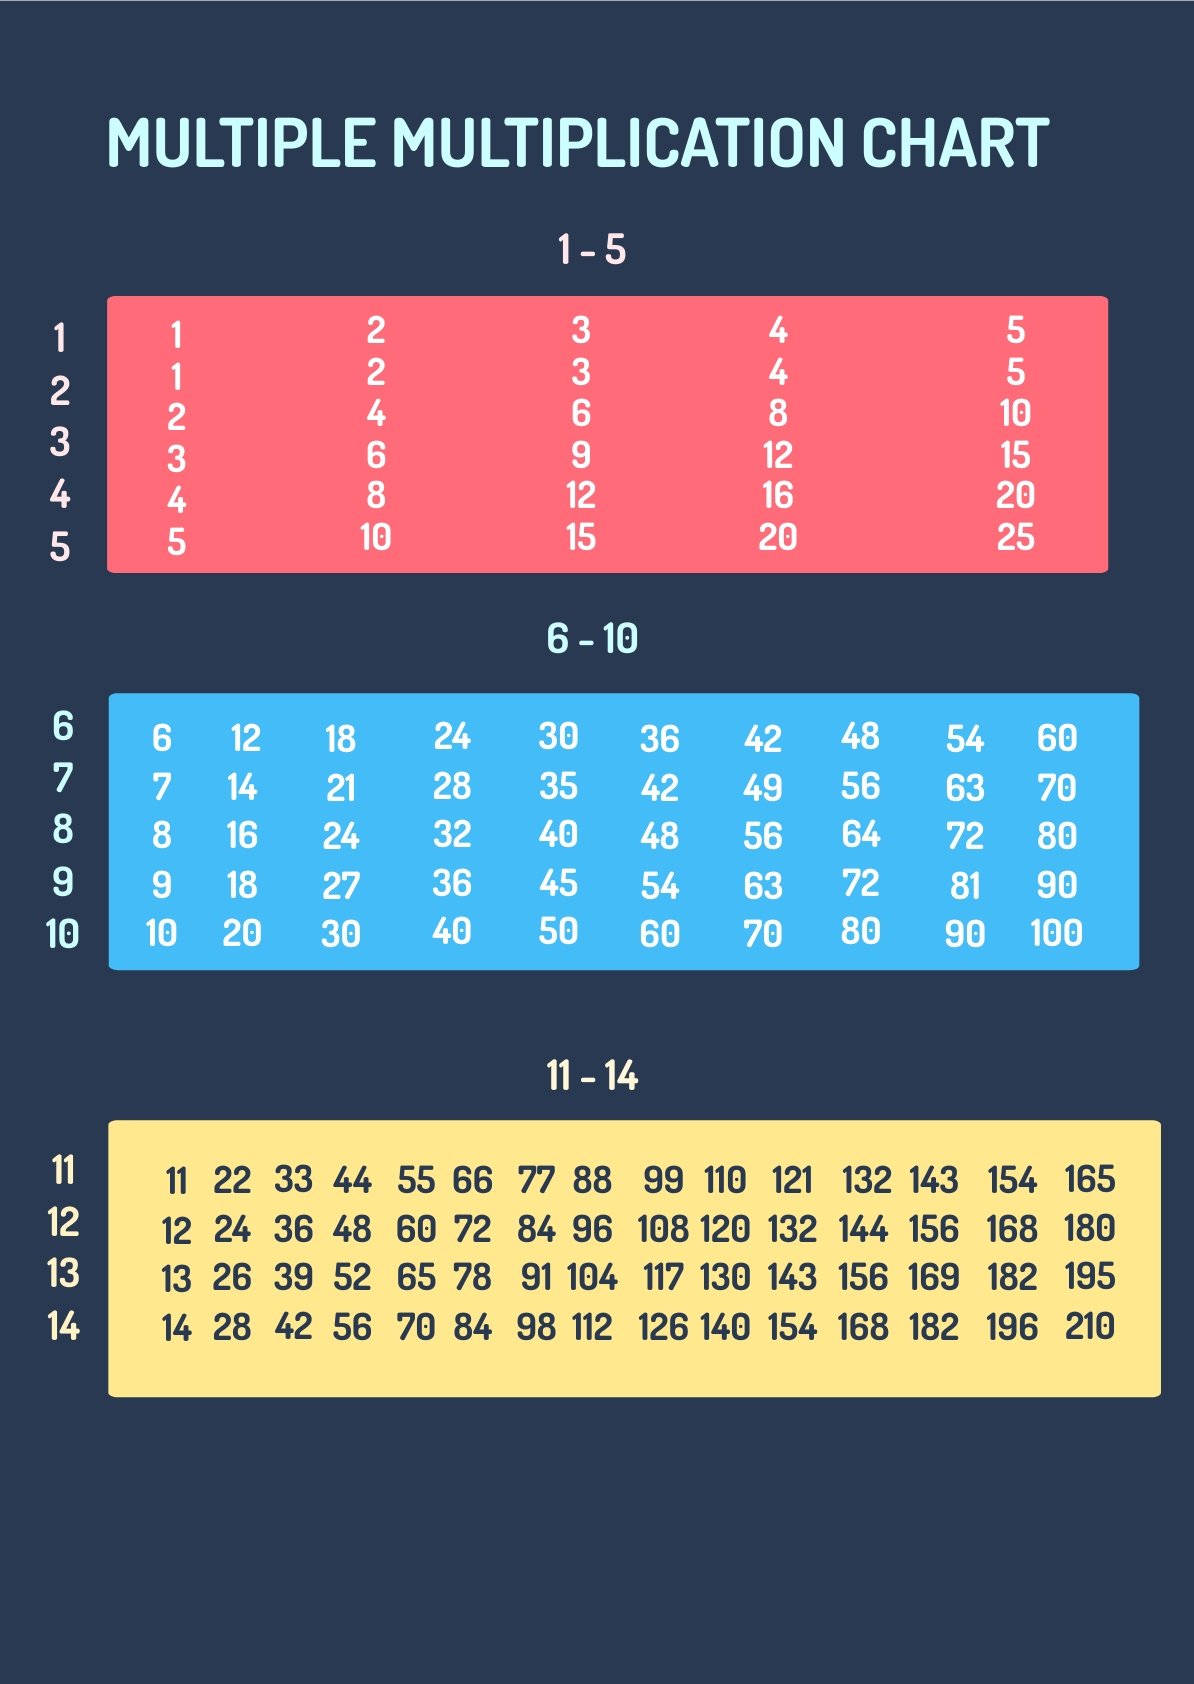 free-multiple-multiplication-chart-download-in-pdf-illustrator